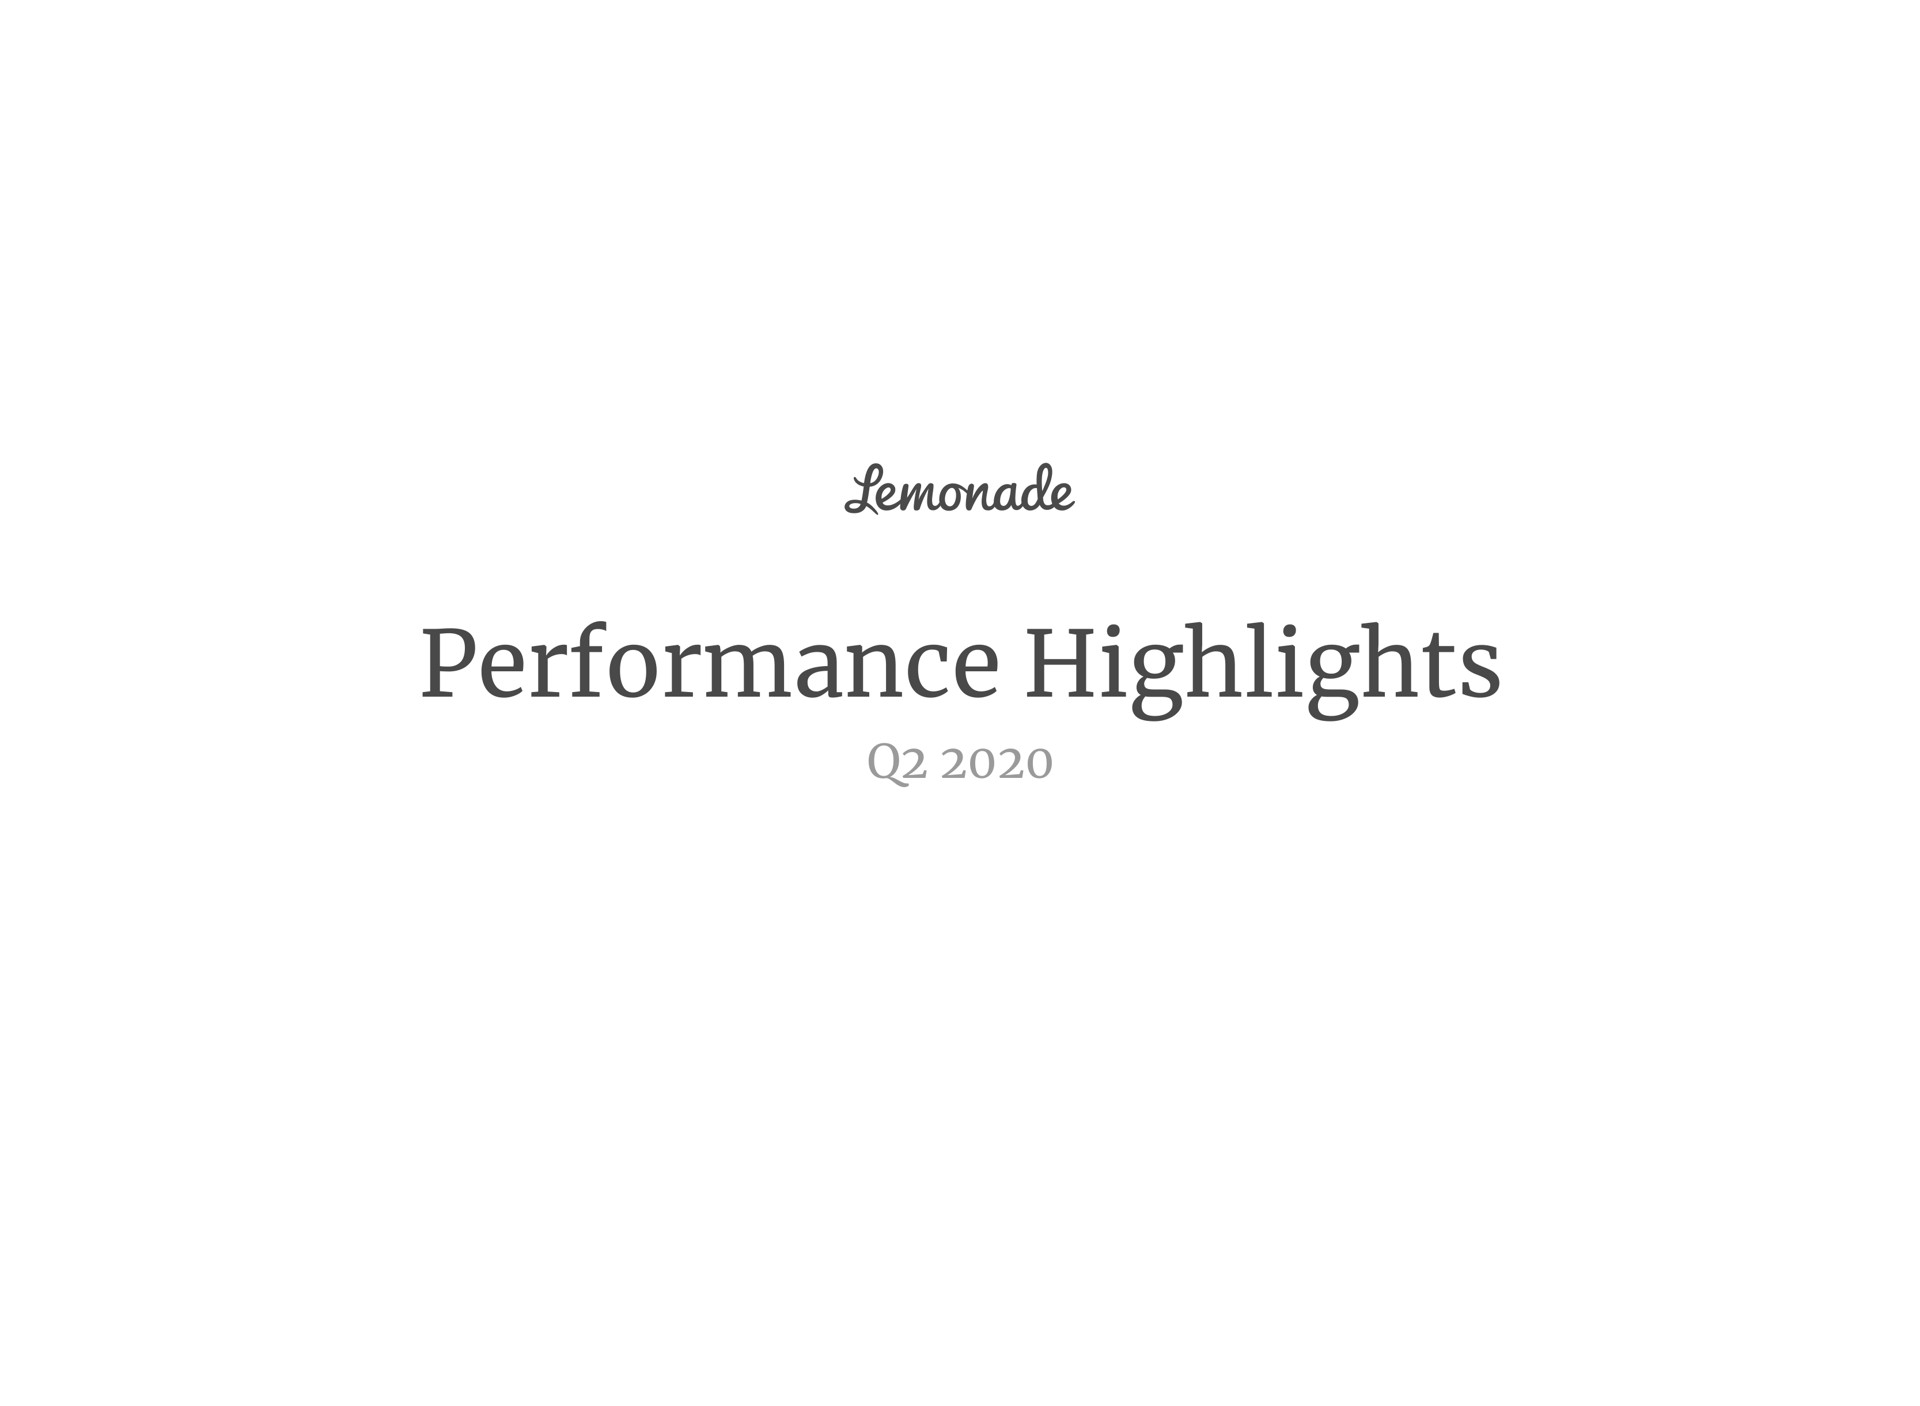 performance highlights lemonade | Lemonade